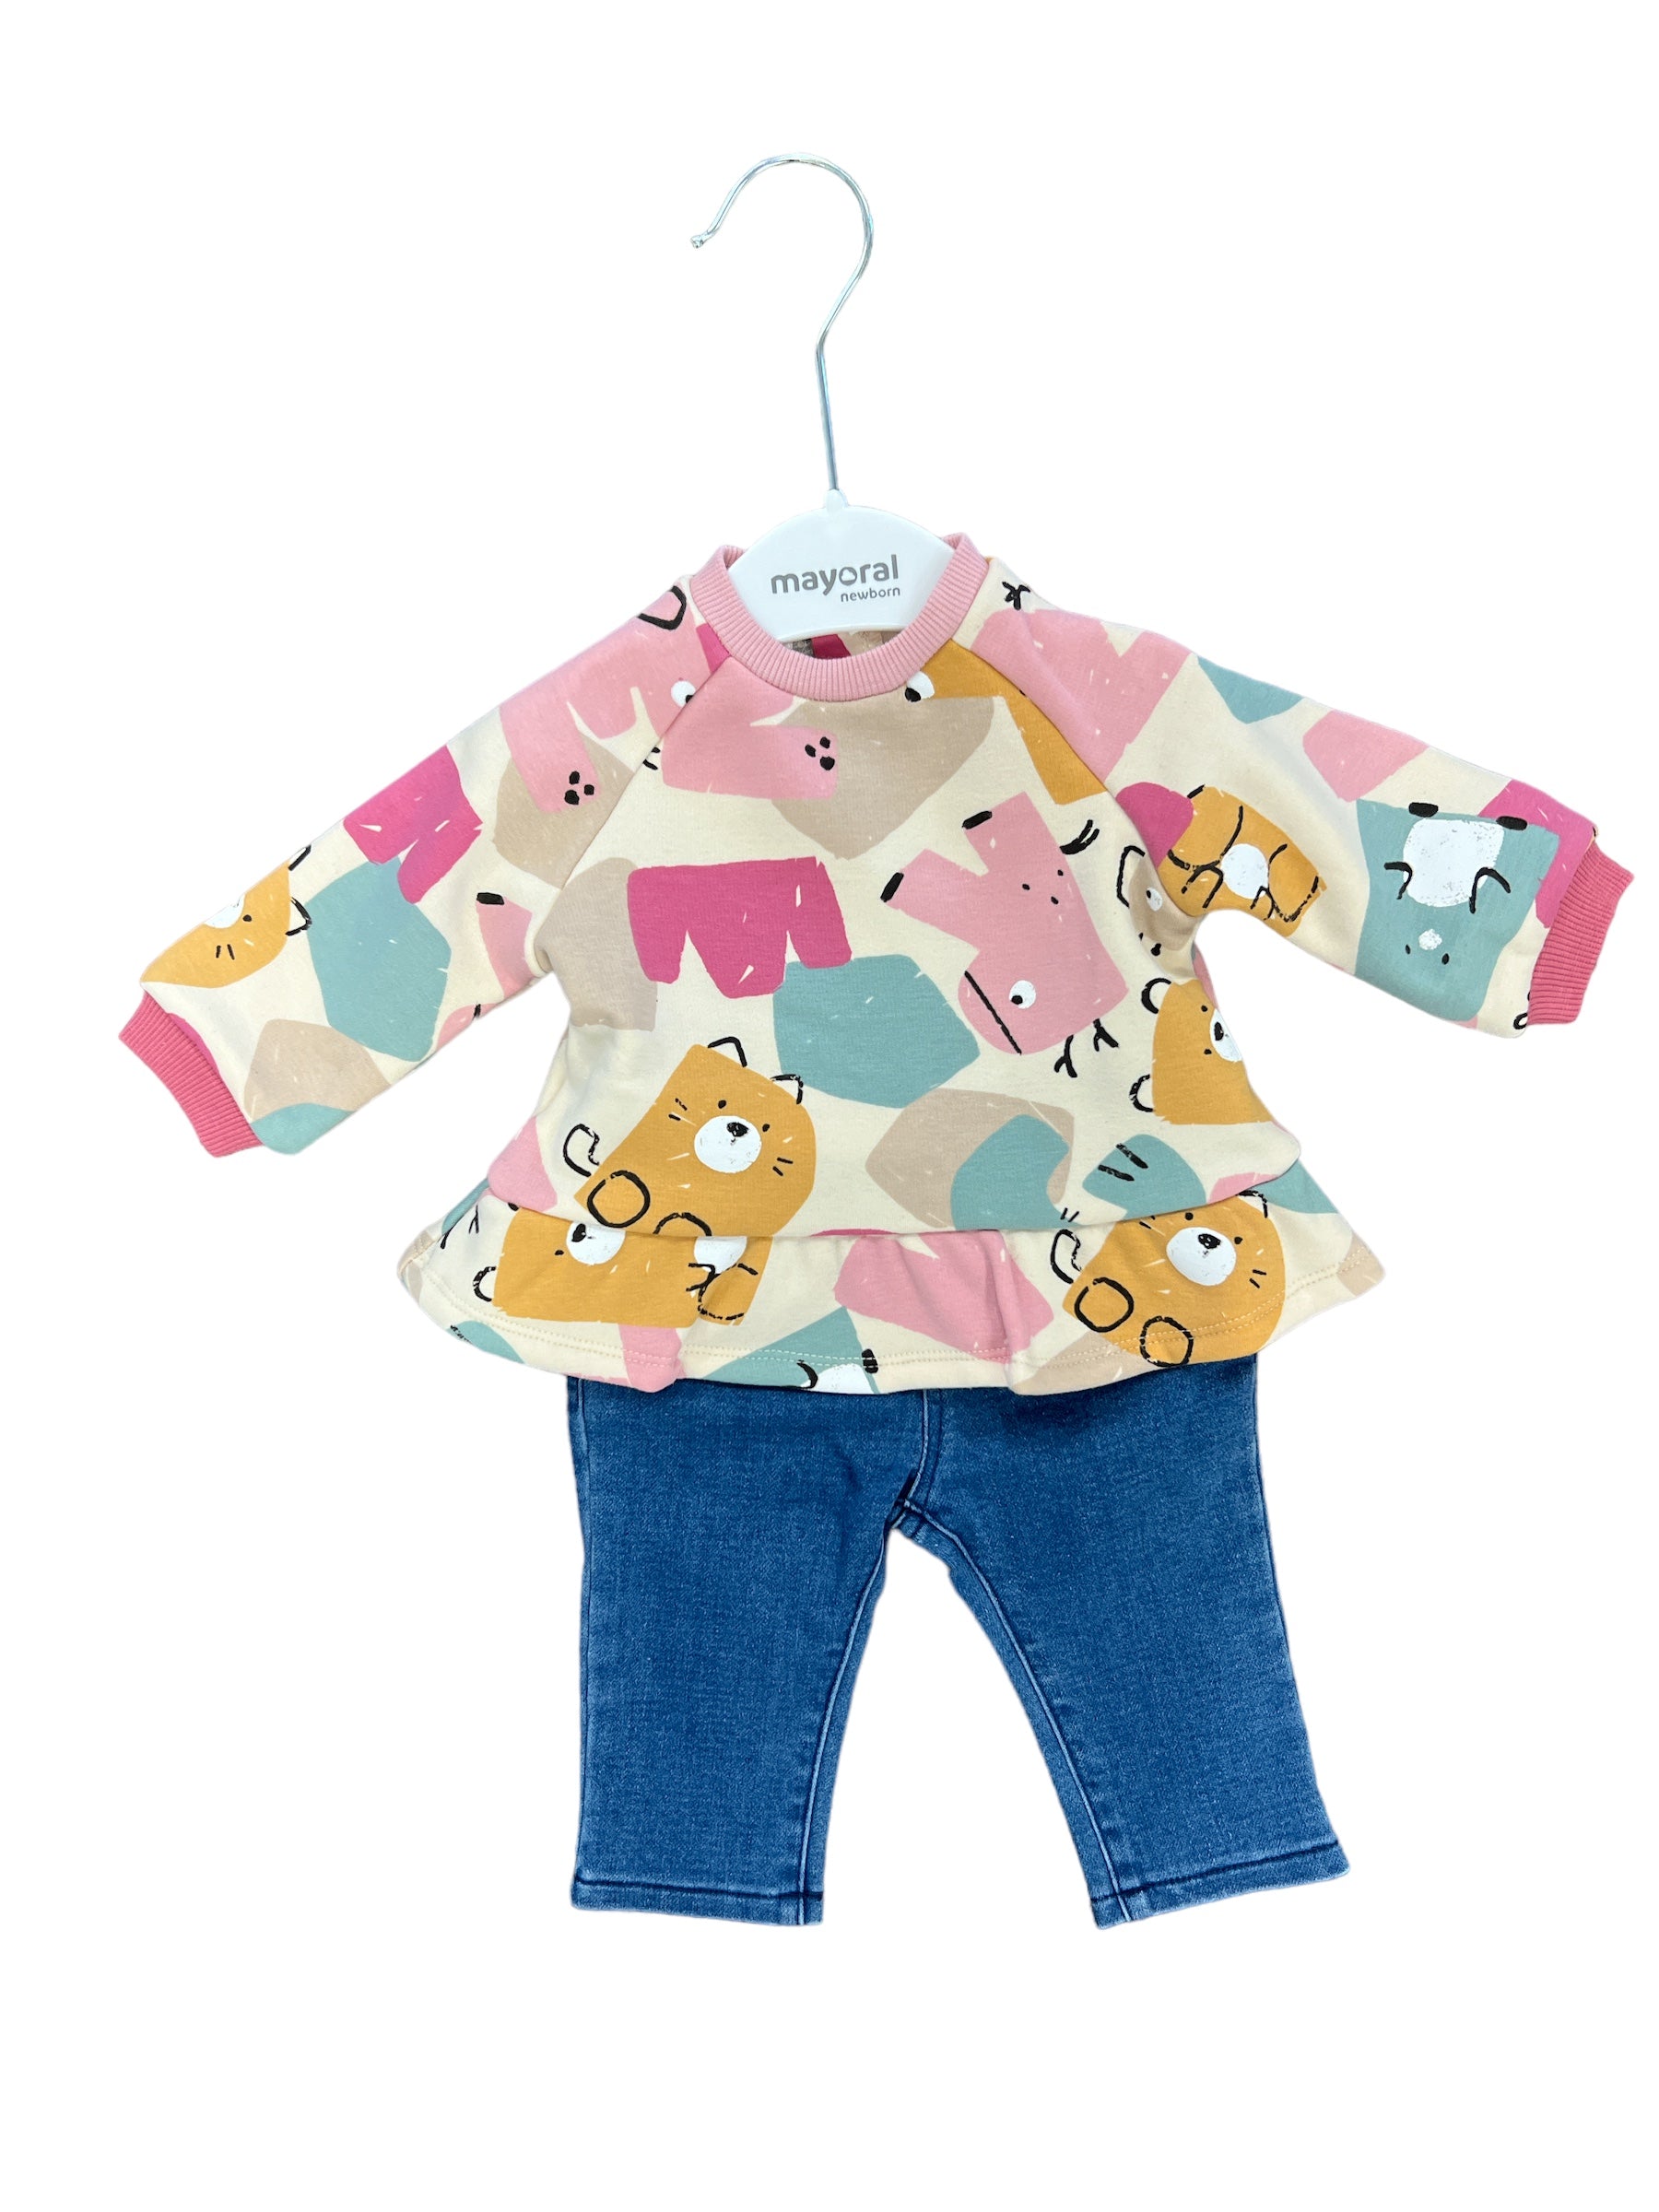 Cora Denim Set-520 Baby & Kids Gifts-Simply Stylish Boutique-Simply Stylish Boutique | Women’s & Kid’s Fashion | Paducah, KY